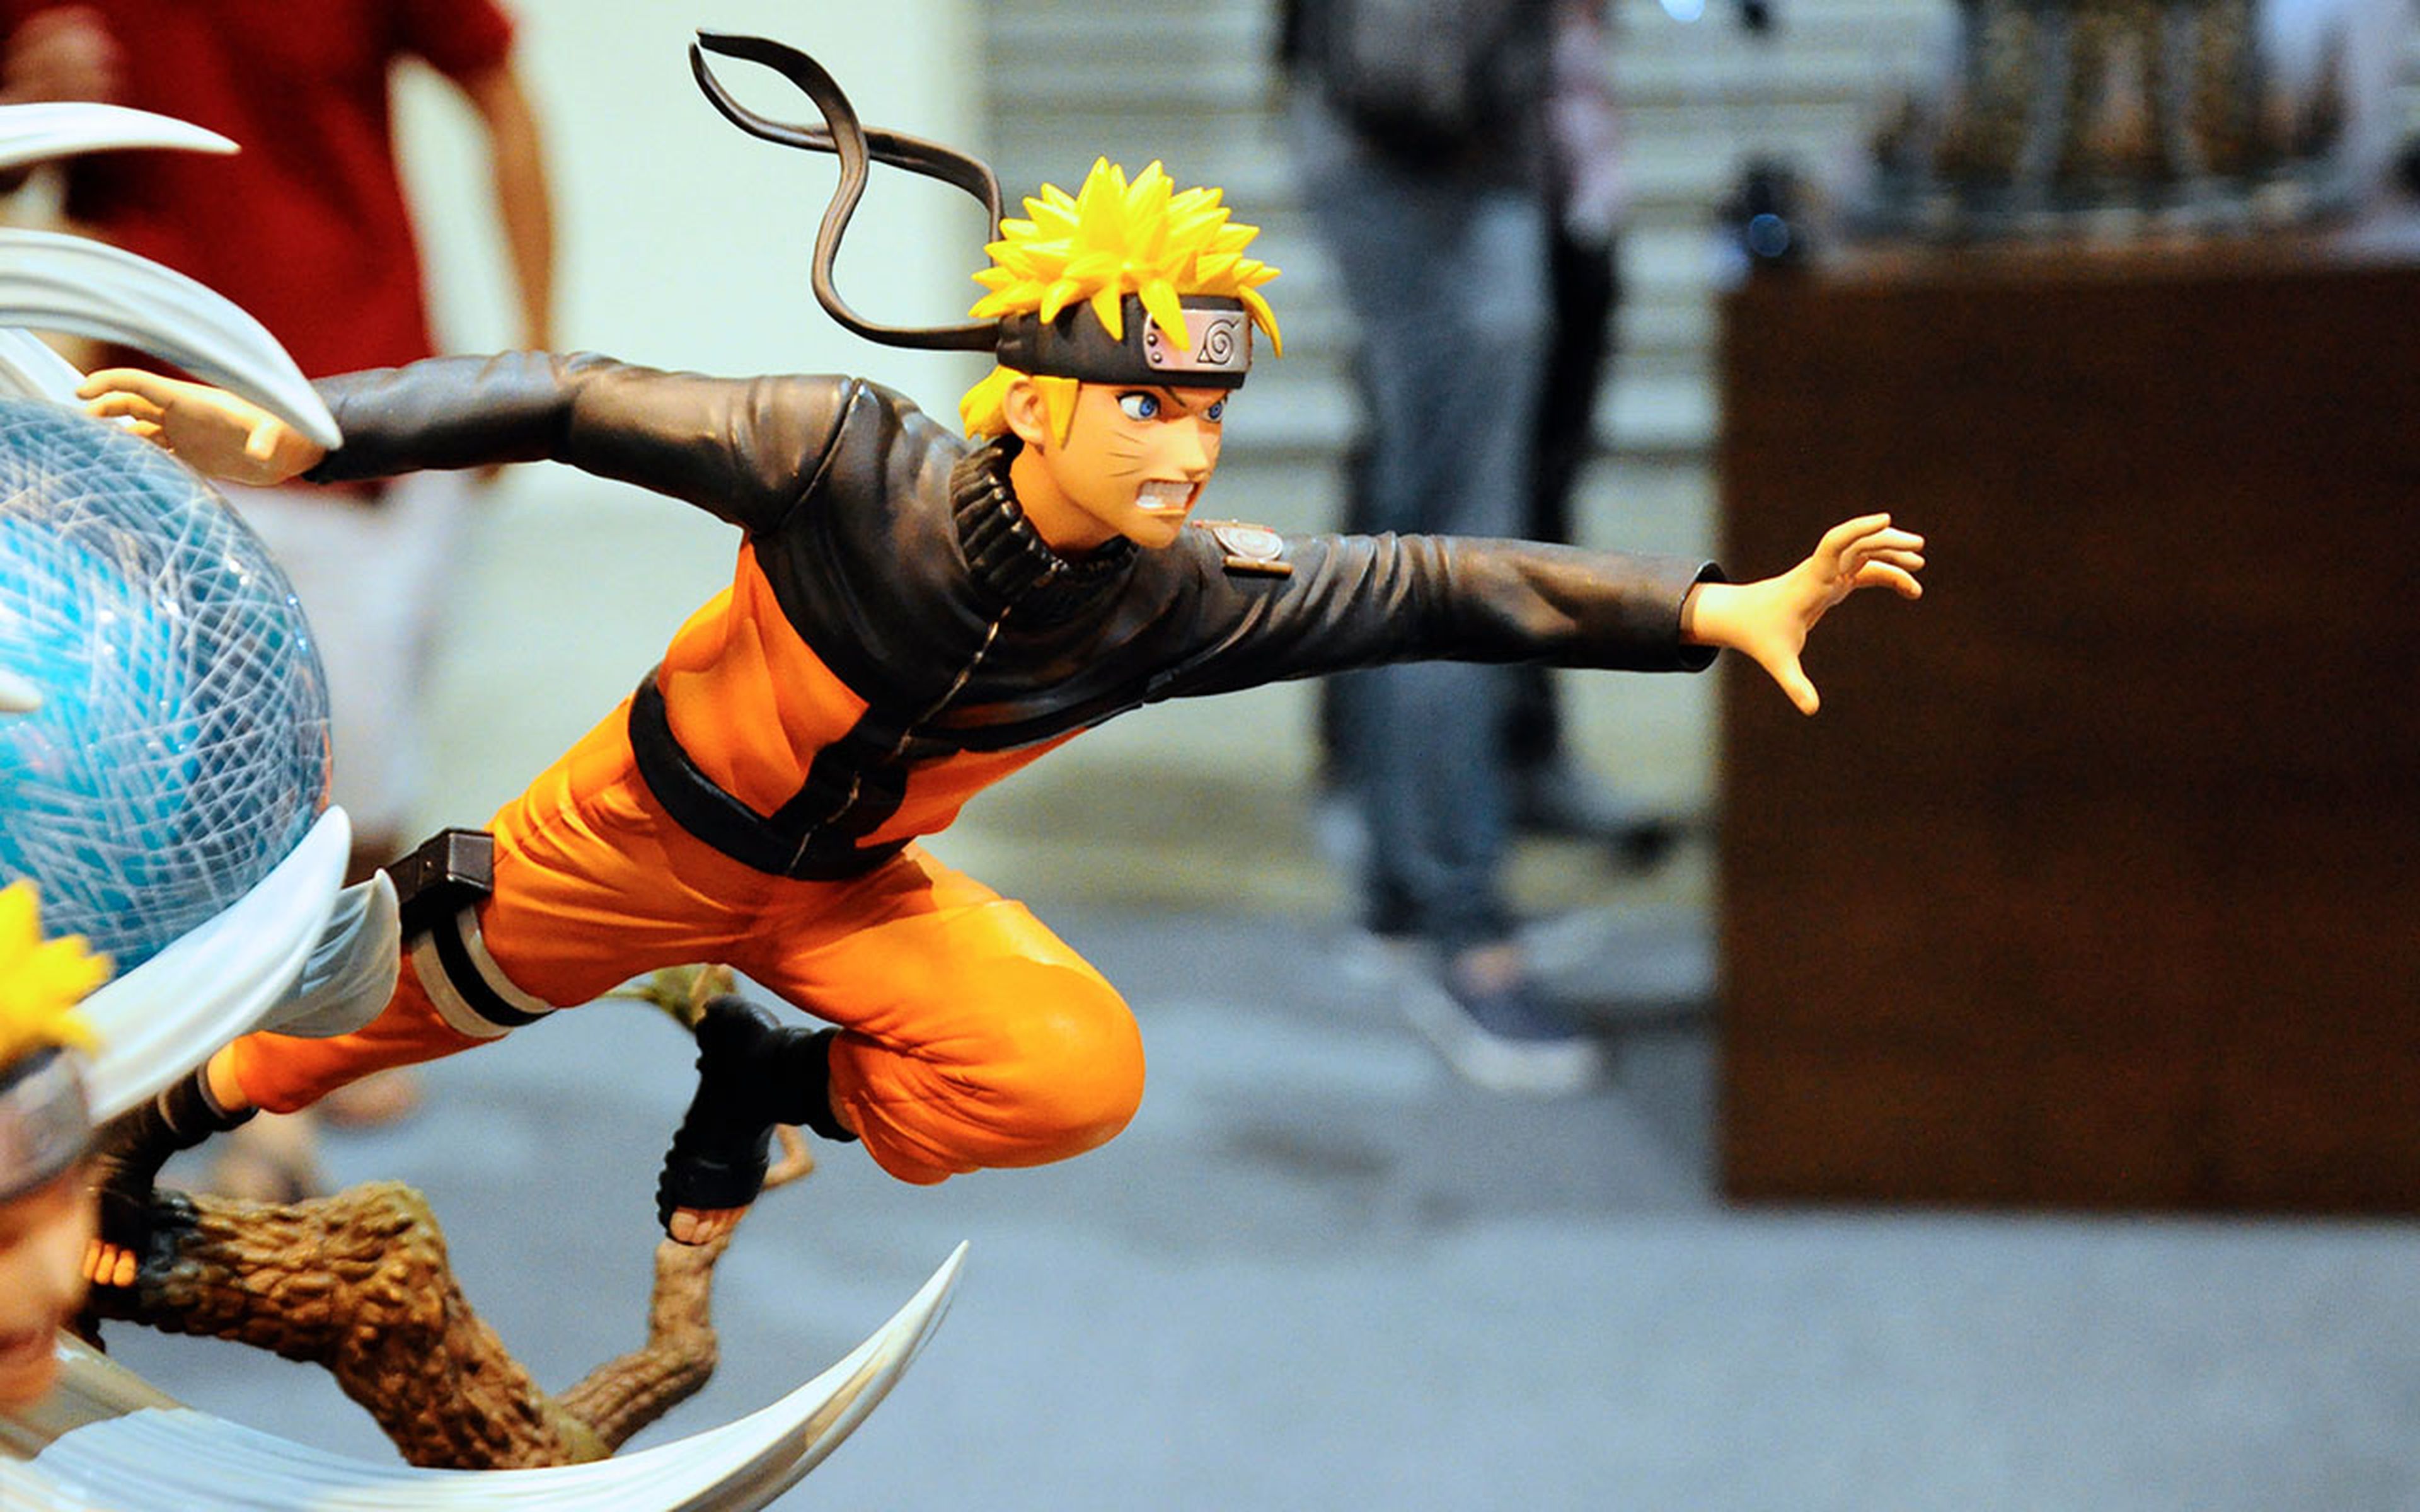 Naruto action figure